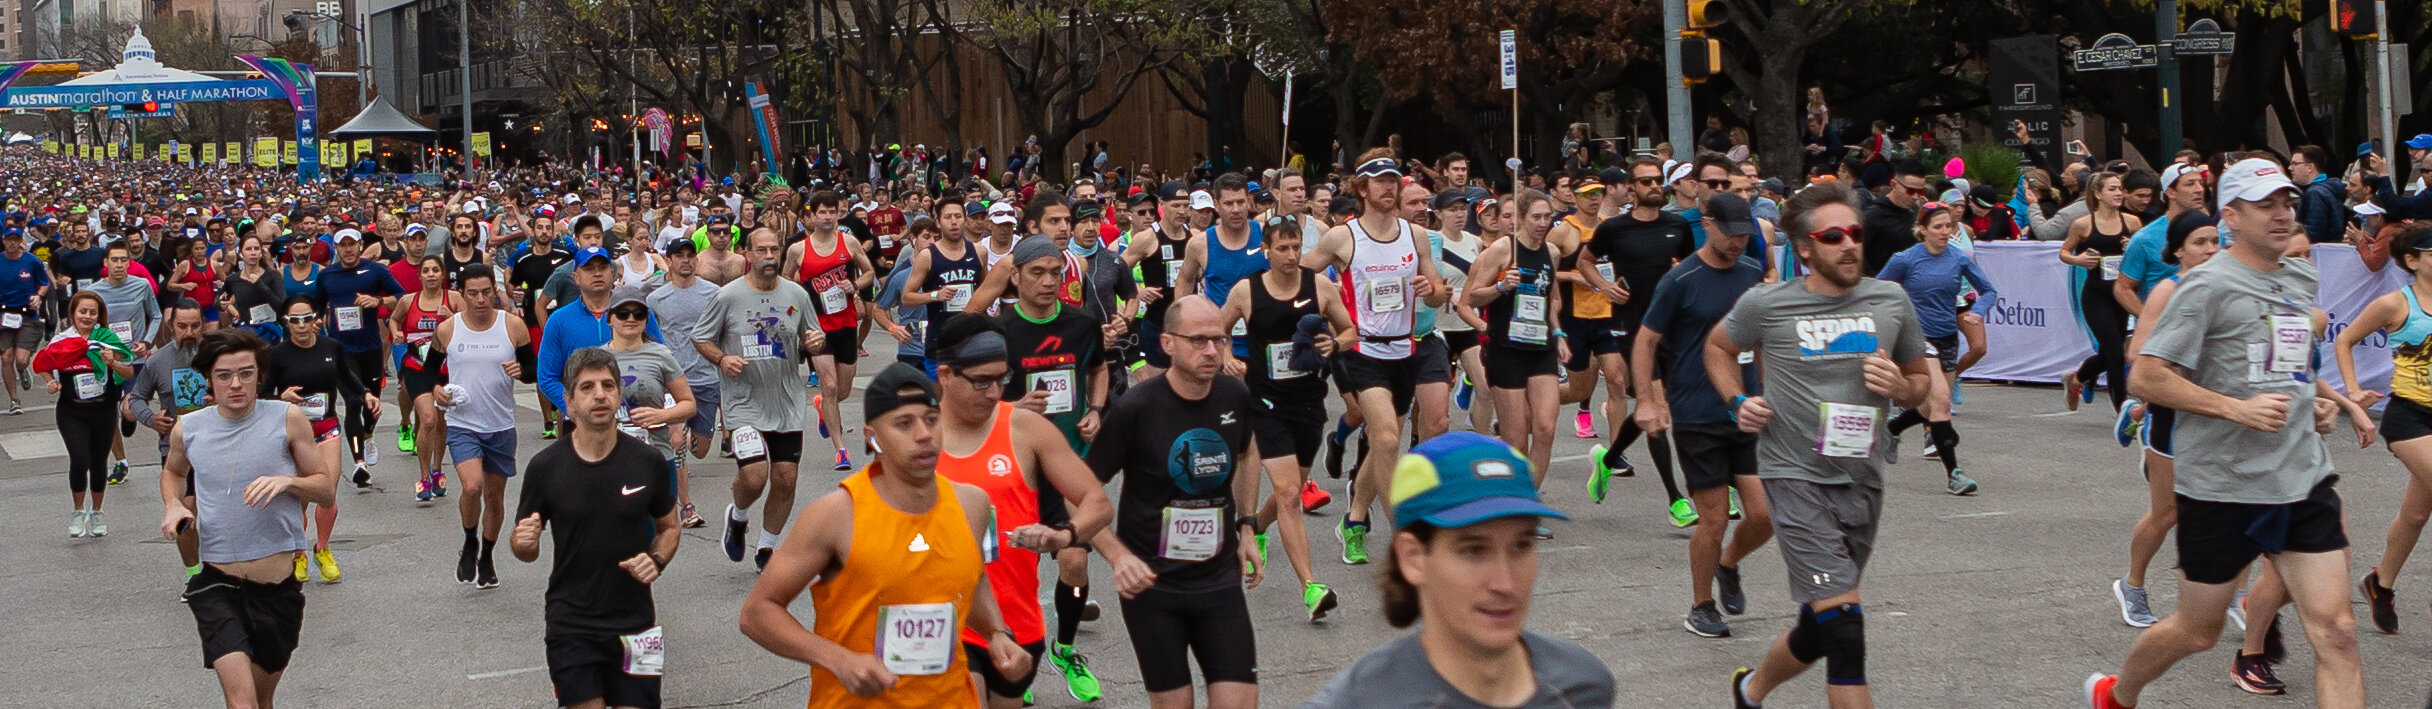 ATX Marathon 2020-8.jpg